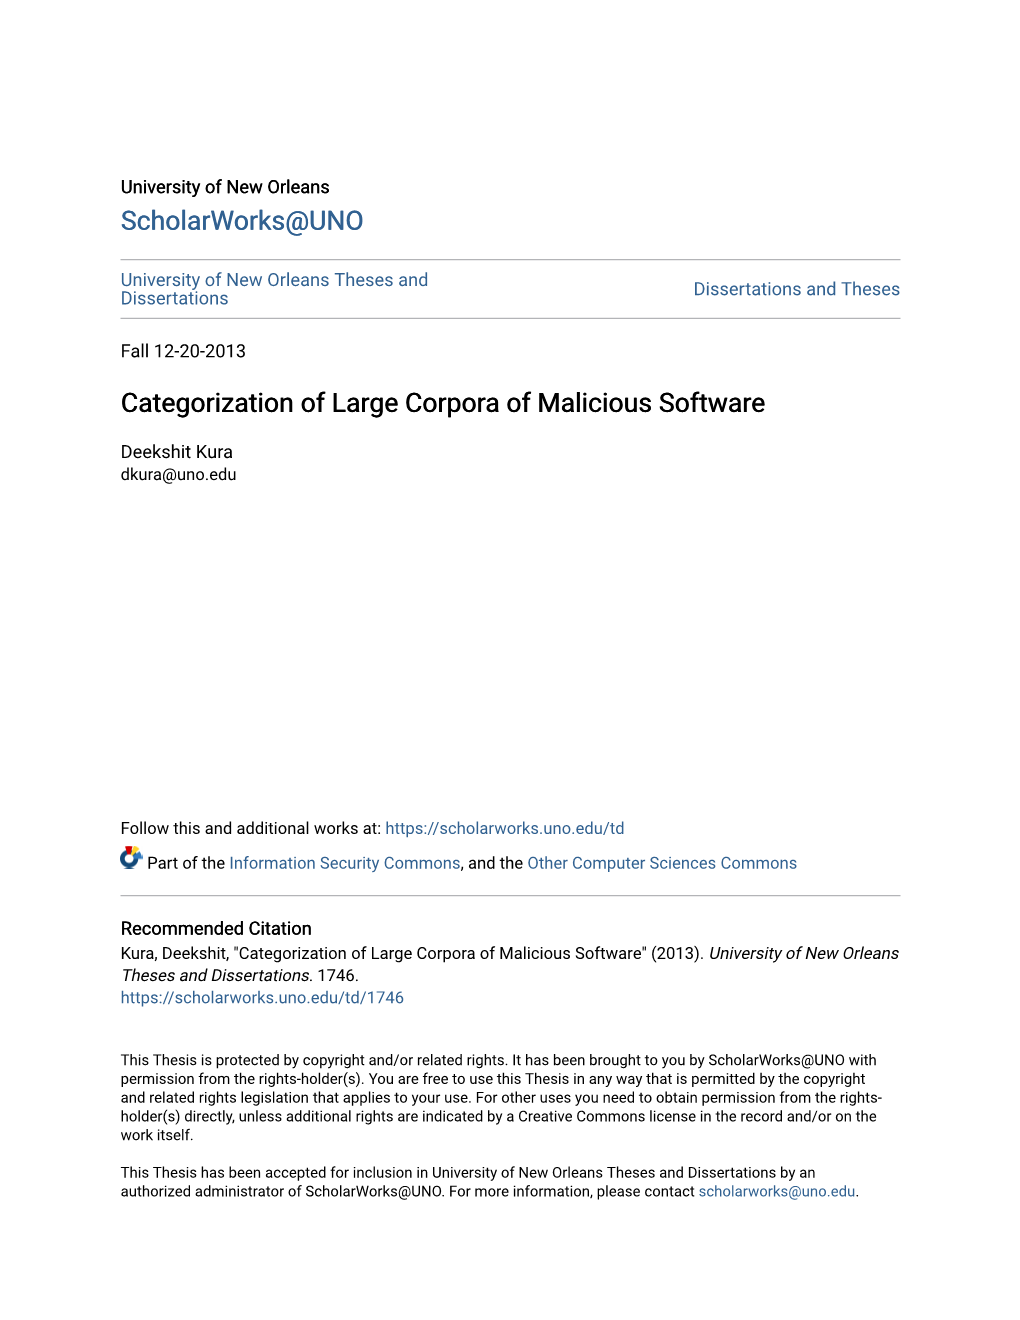 Categorization of Large Corpora of Malicious Software